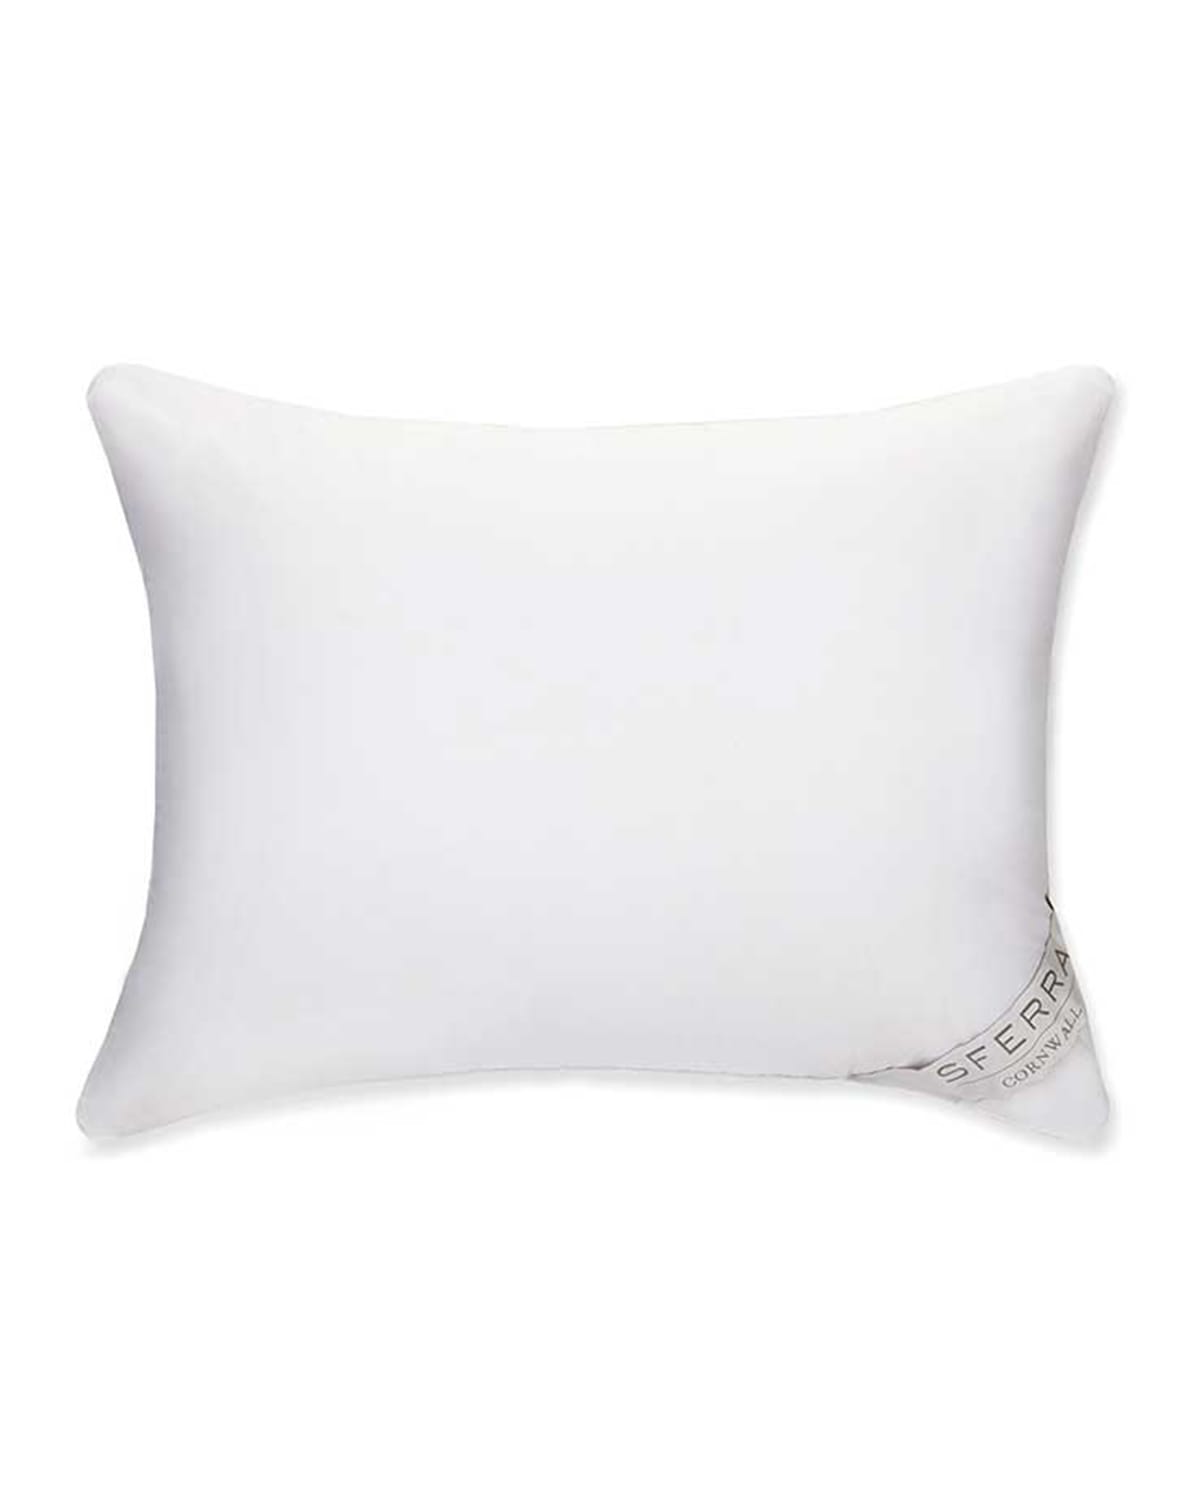 Sferra Cornwall Soft Down Pillow, Queen In White